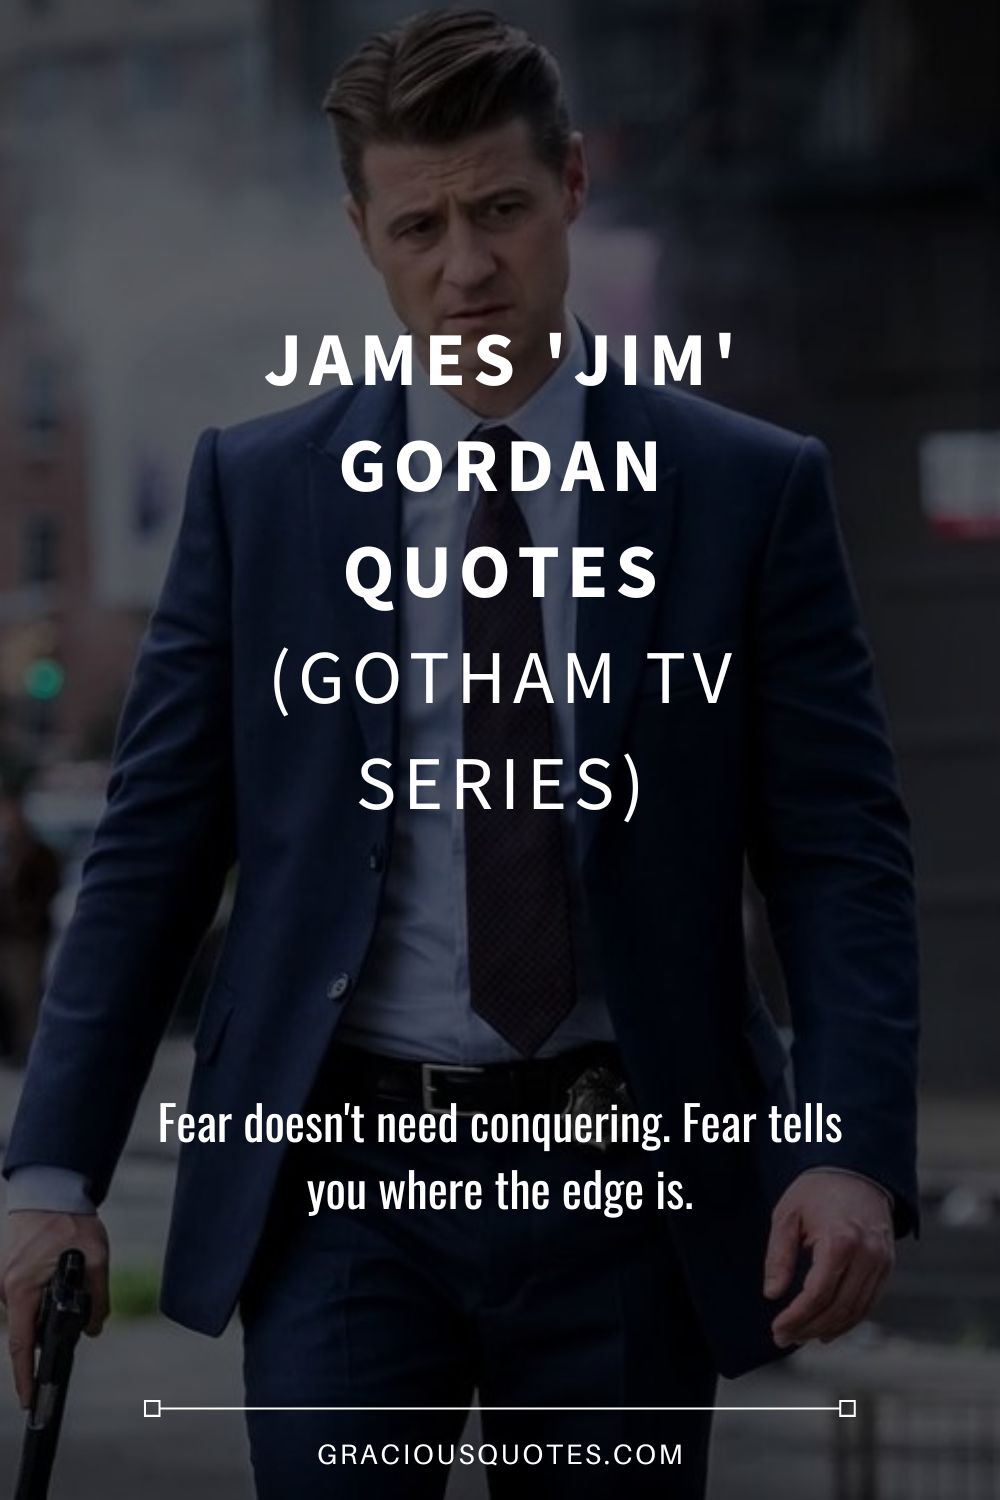 James 'Jim' Gordan Quotes (GOTHAM TV SERIES) - Gracious Quotes